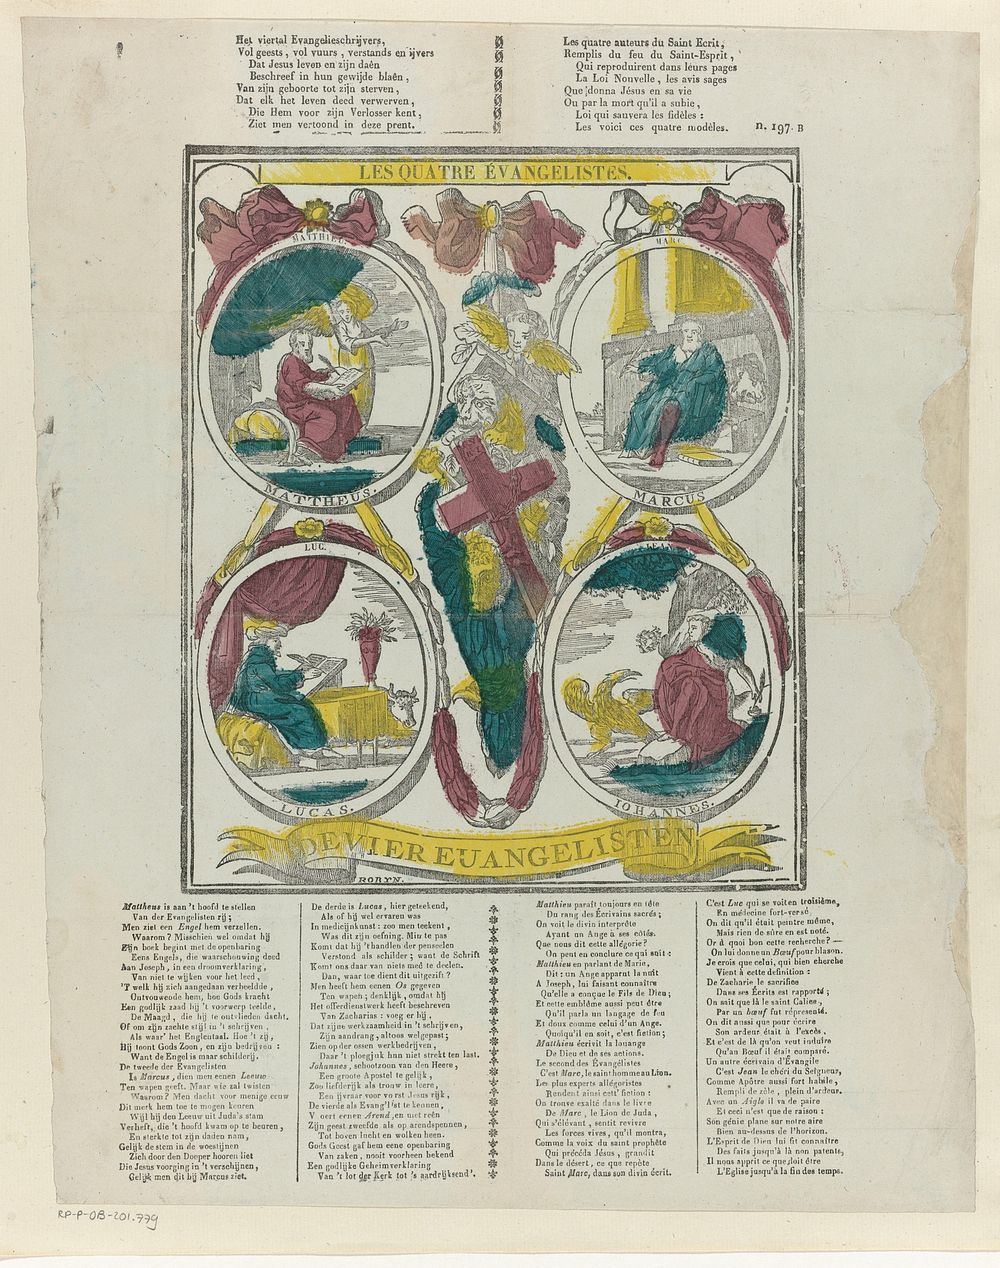 Le quatres évangelistes / De vier evangelisten (1800 - 1833) by A Robyn, J Robyn and Philippus Jacobus Brepols